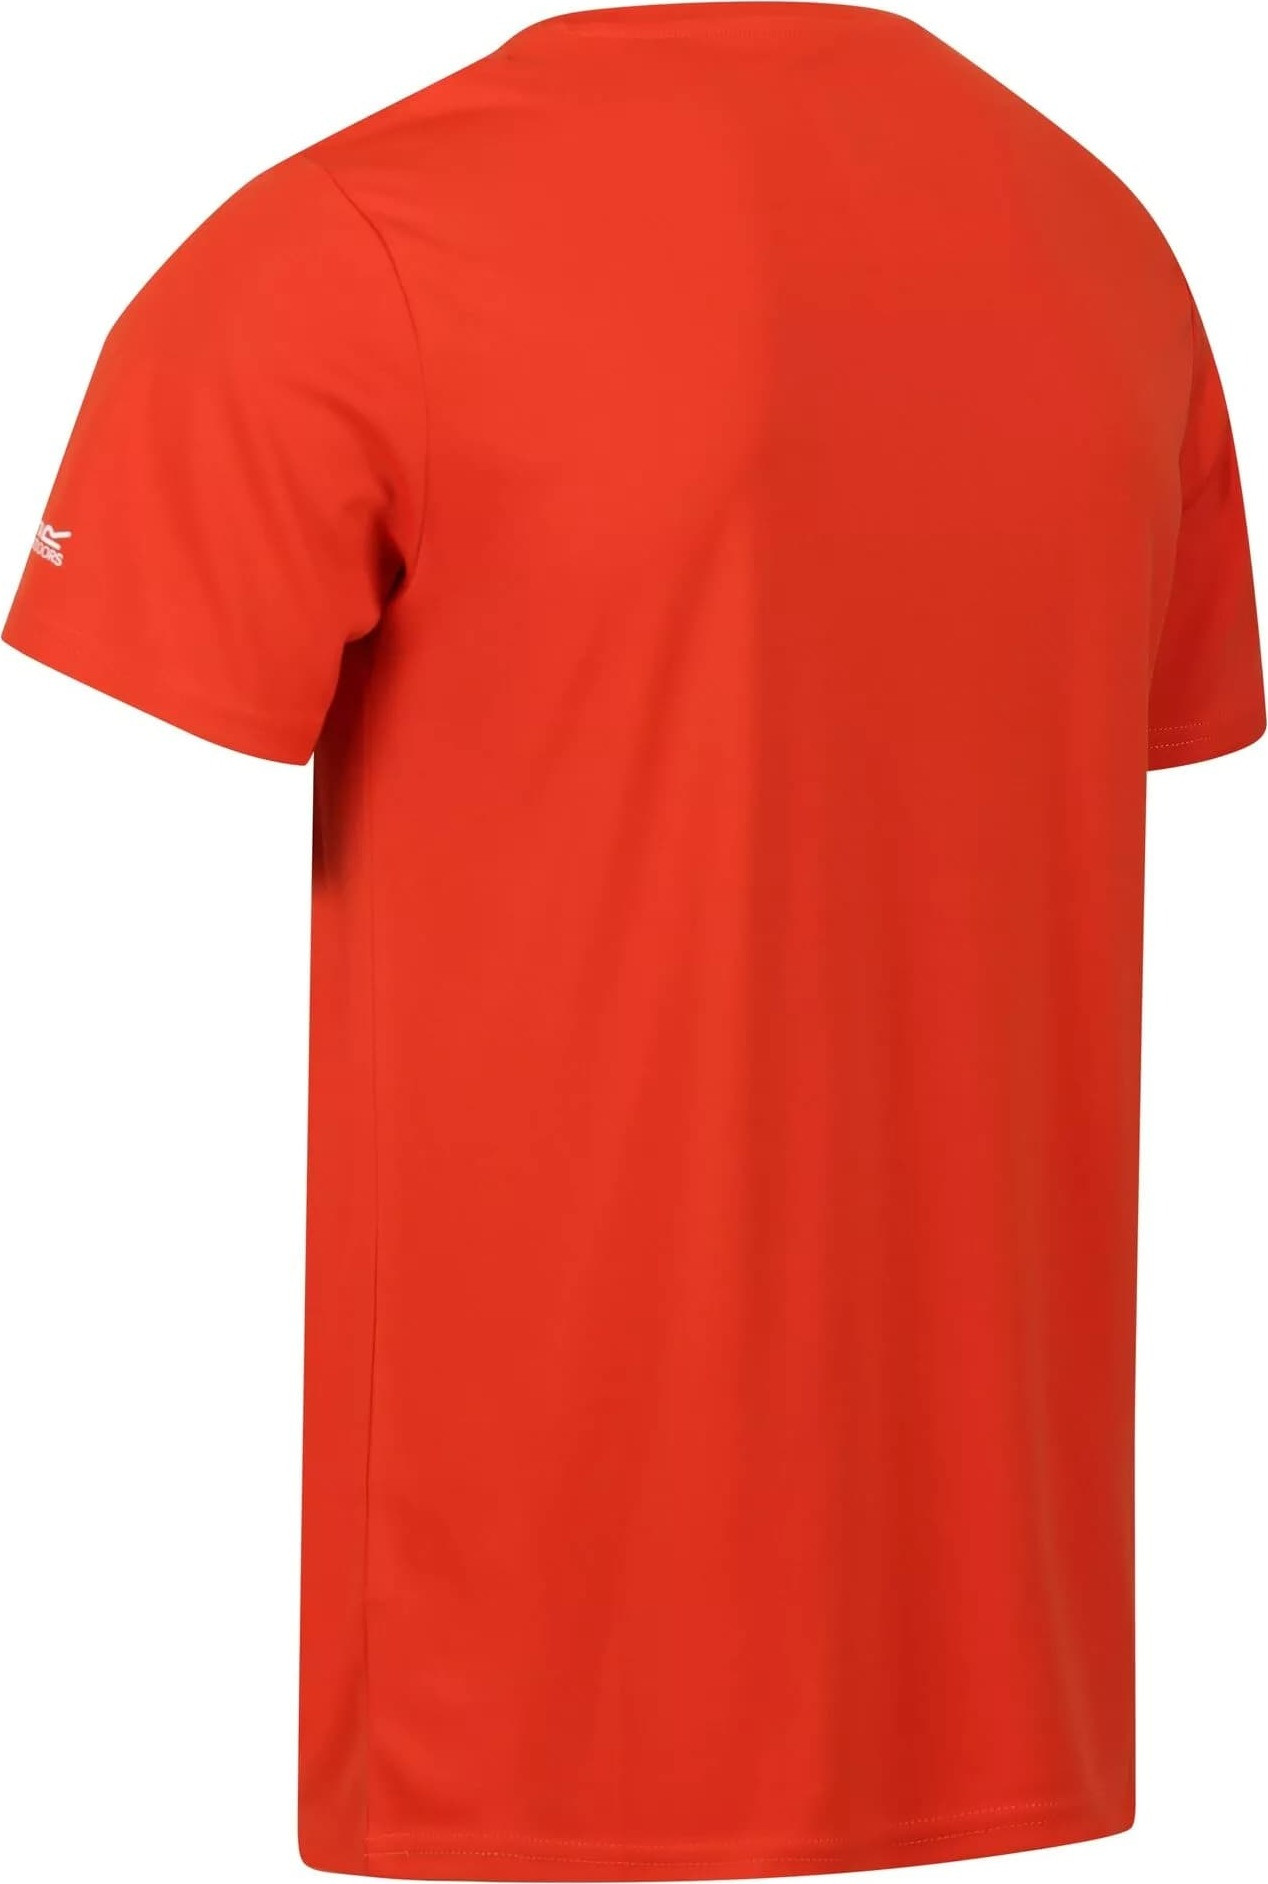 Pánské tričko Regatta Fingal VII RMT272-33L oranžové XL